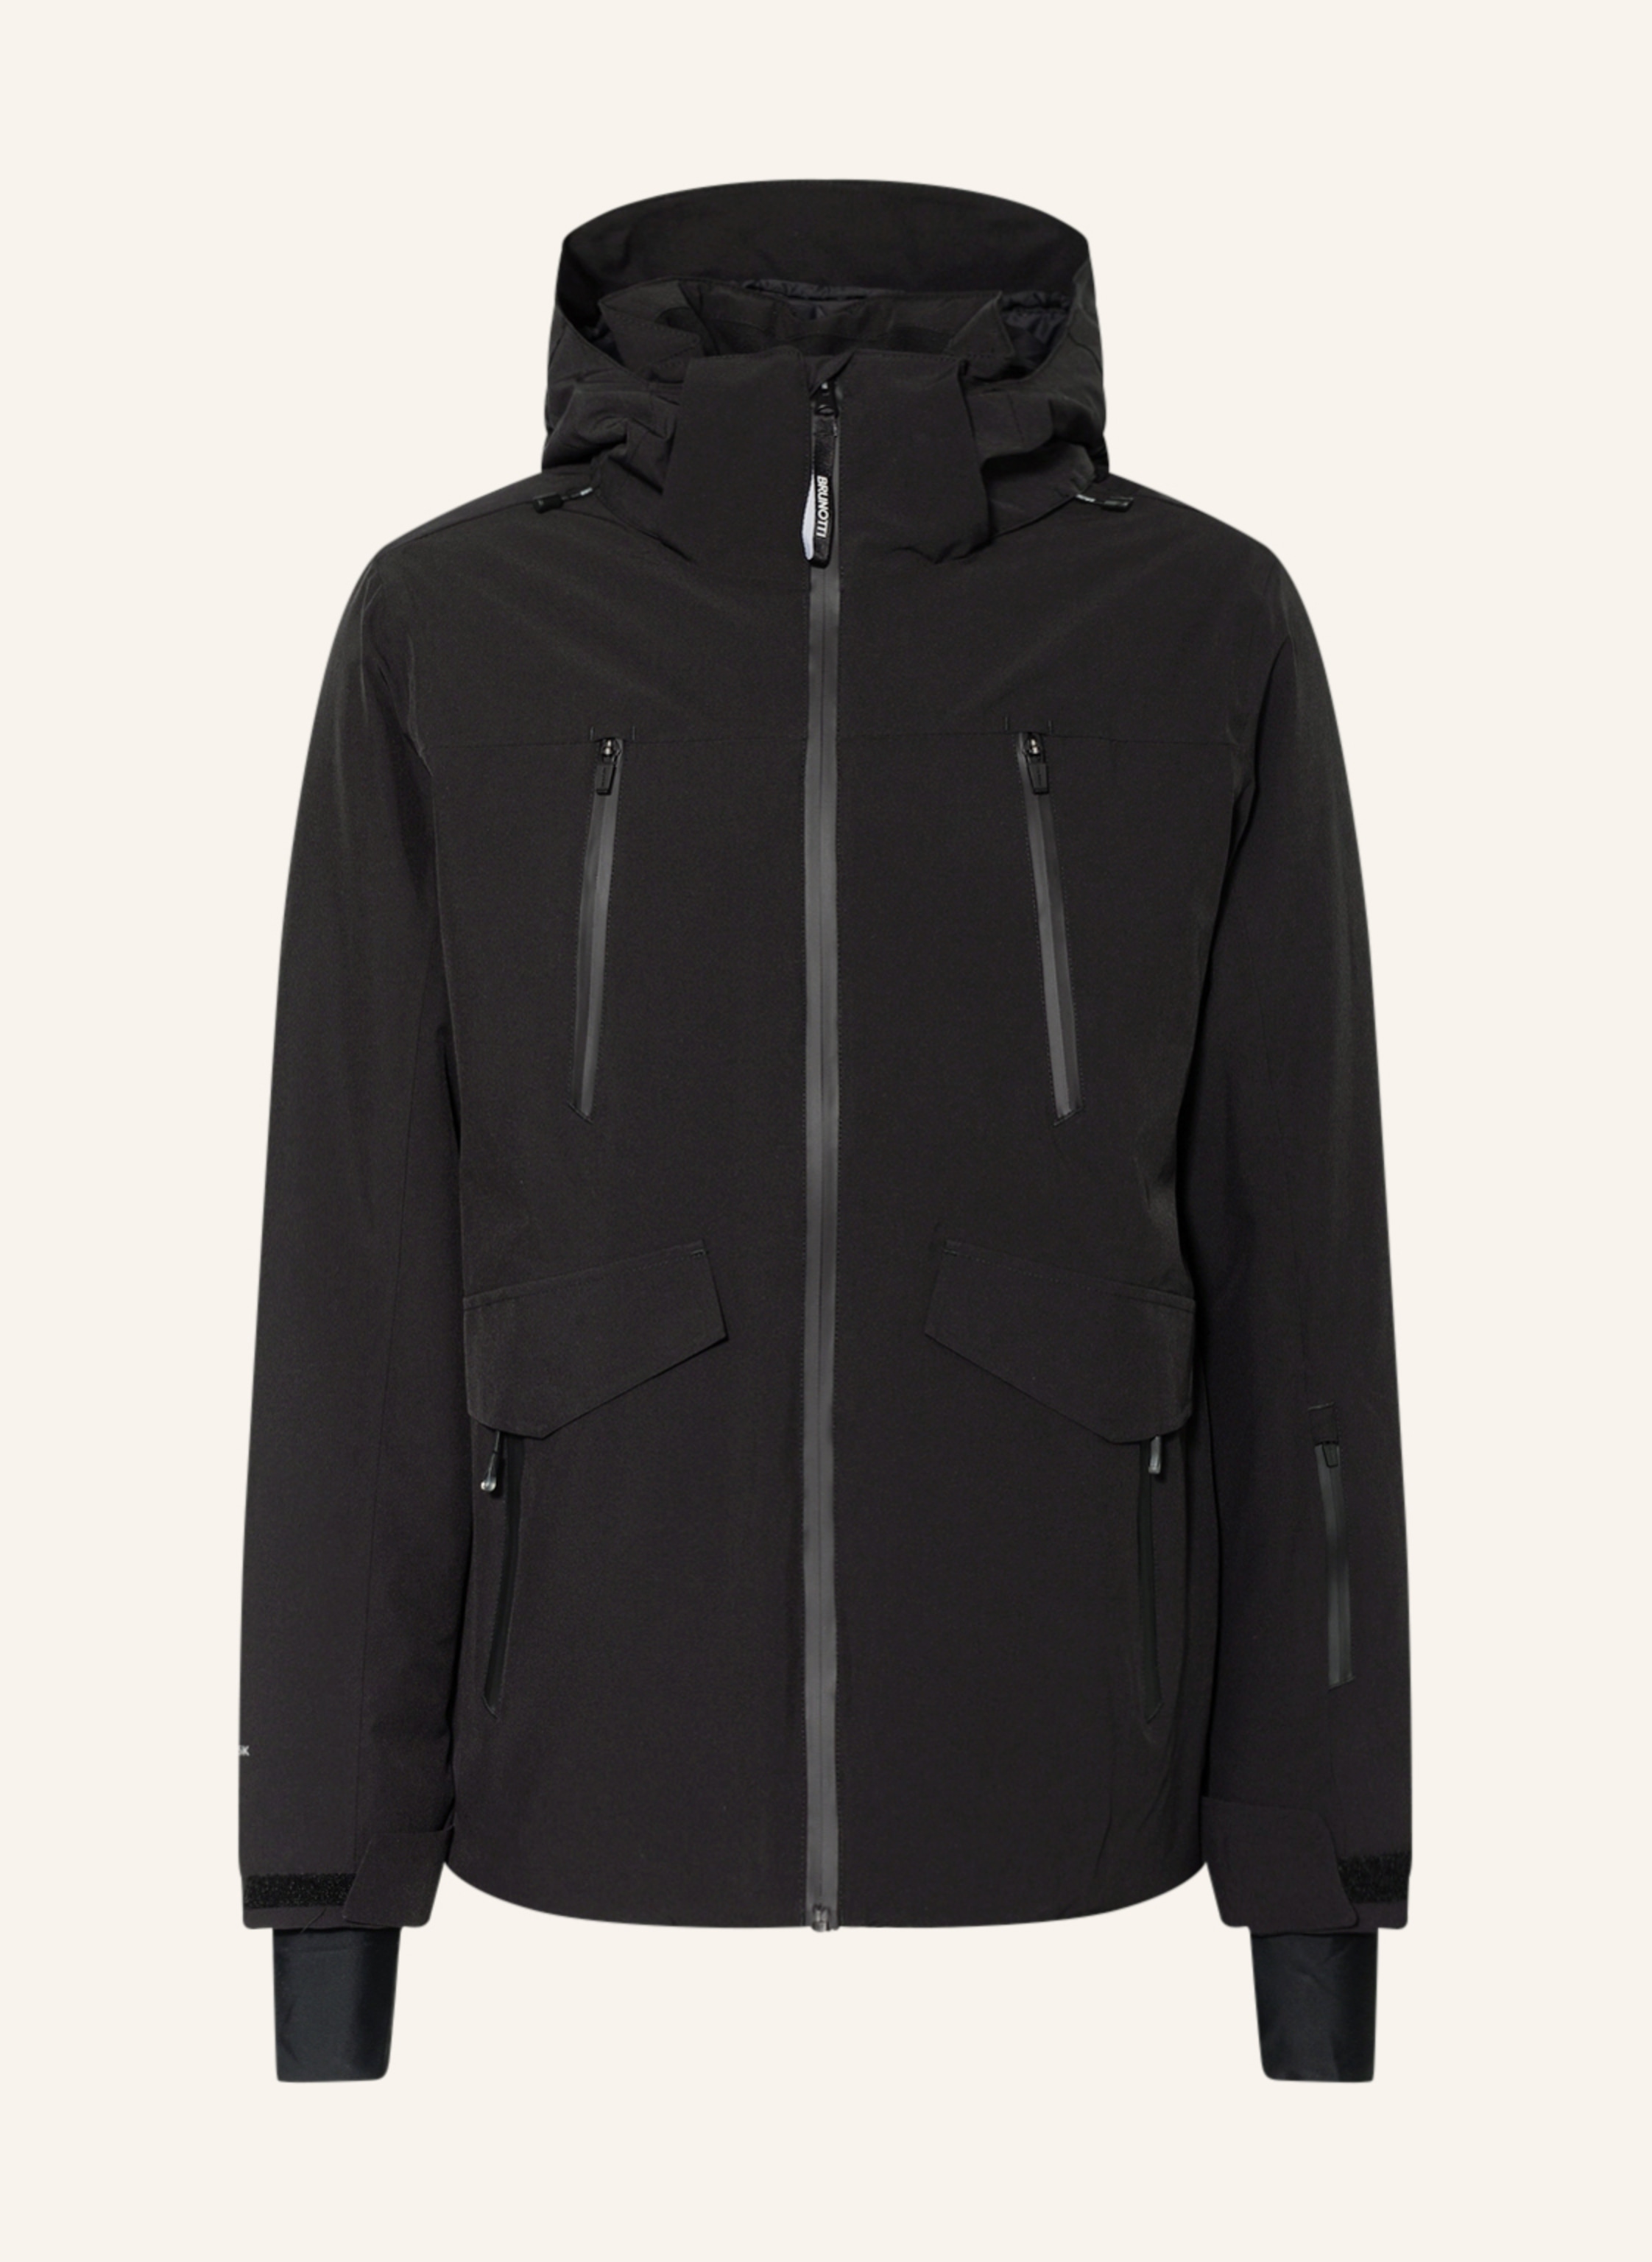 BRUNOTTI Ski jacket BORAN in black | Breuninger